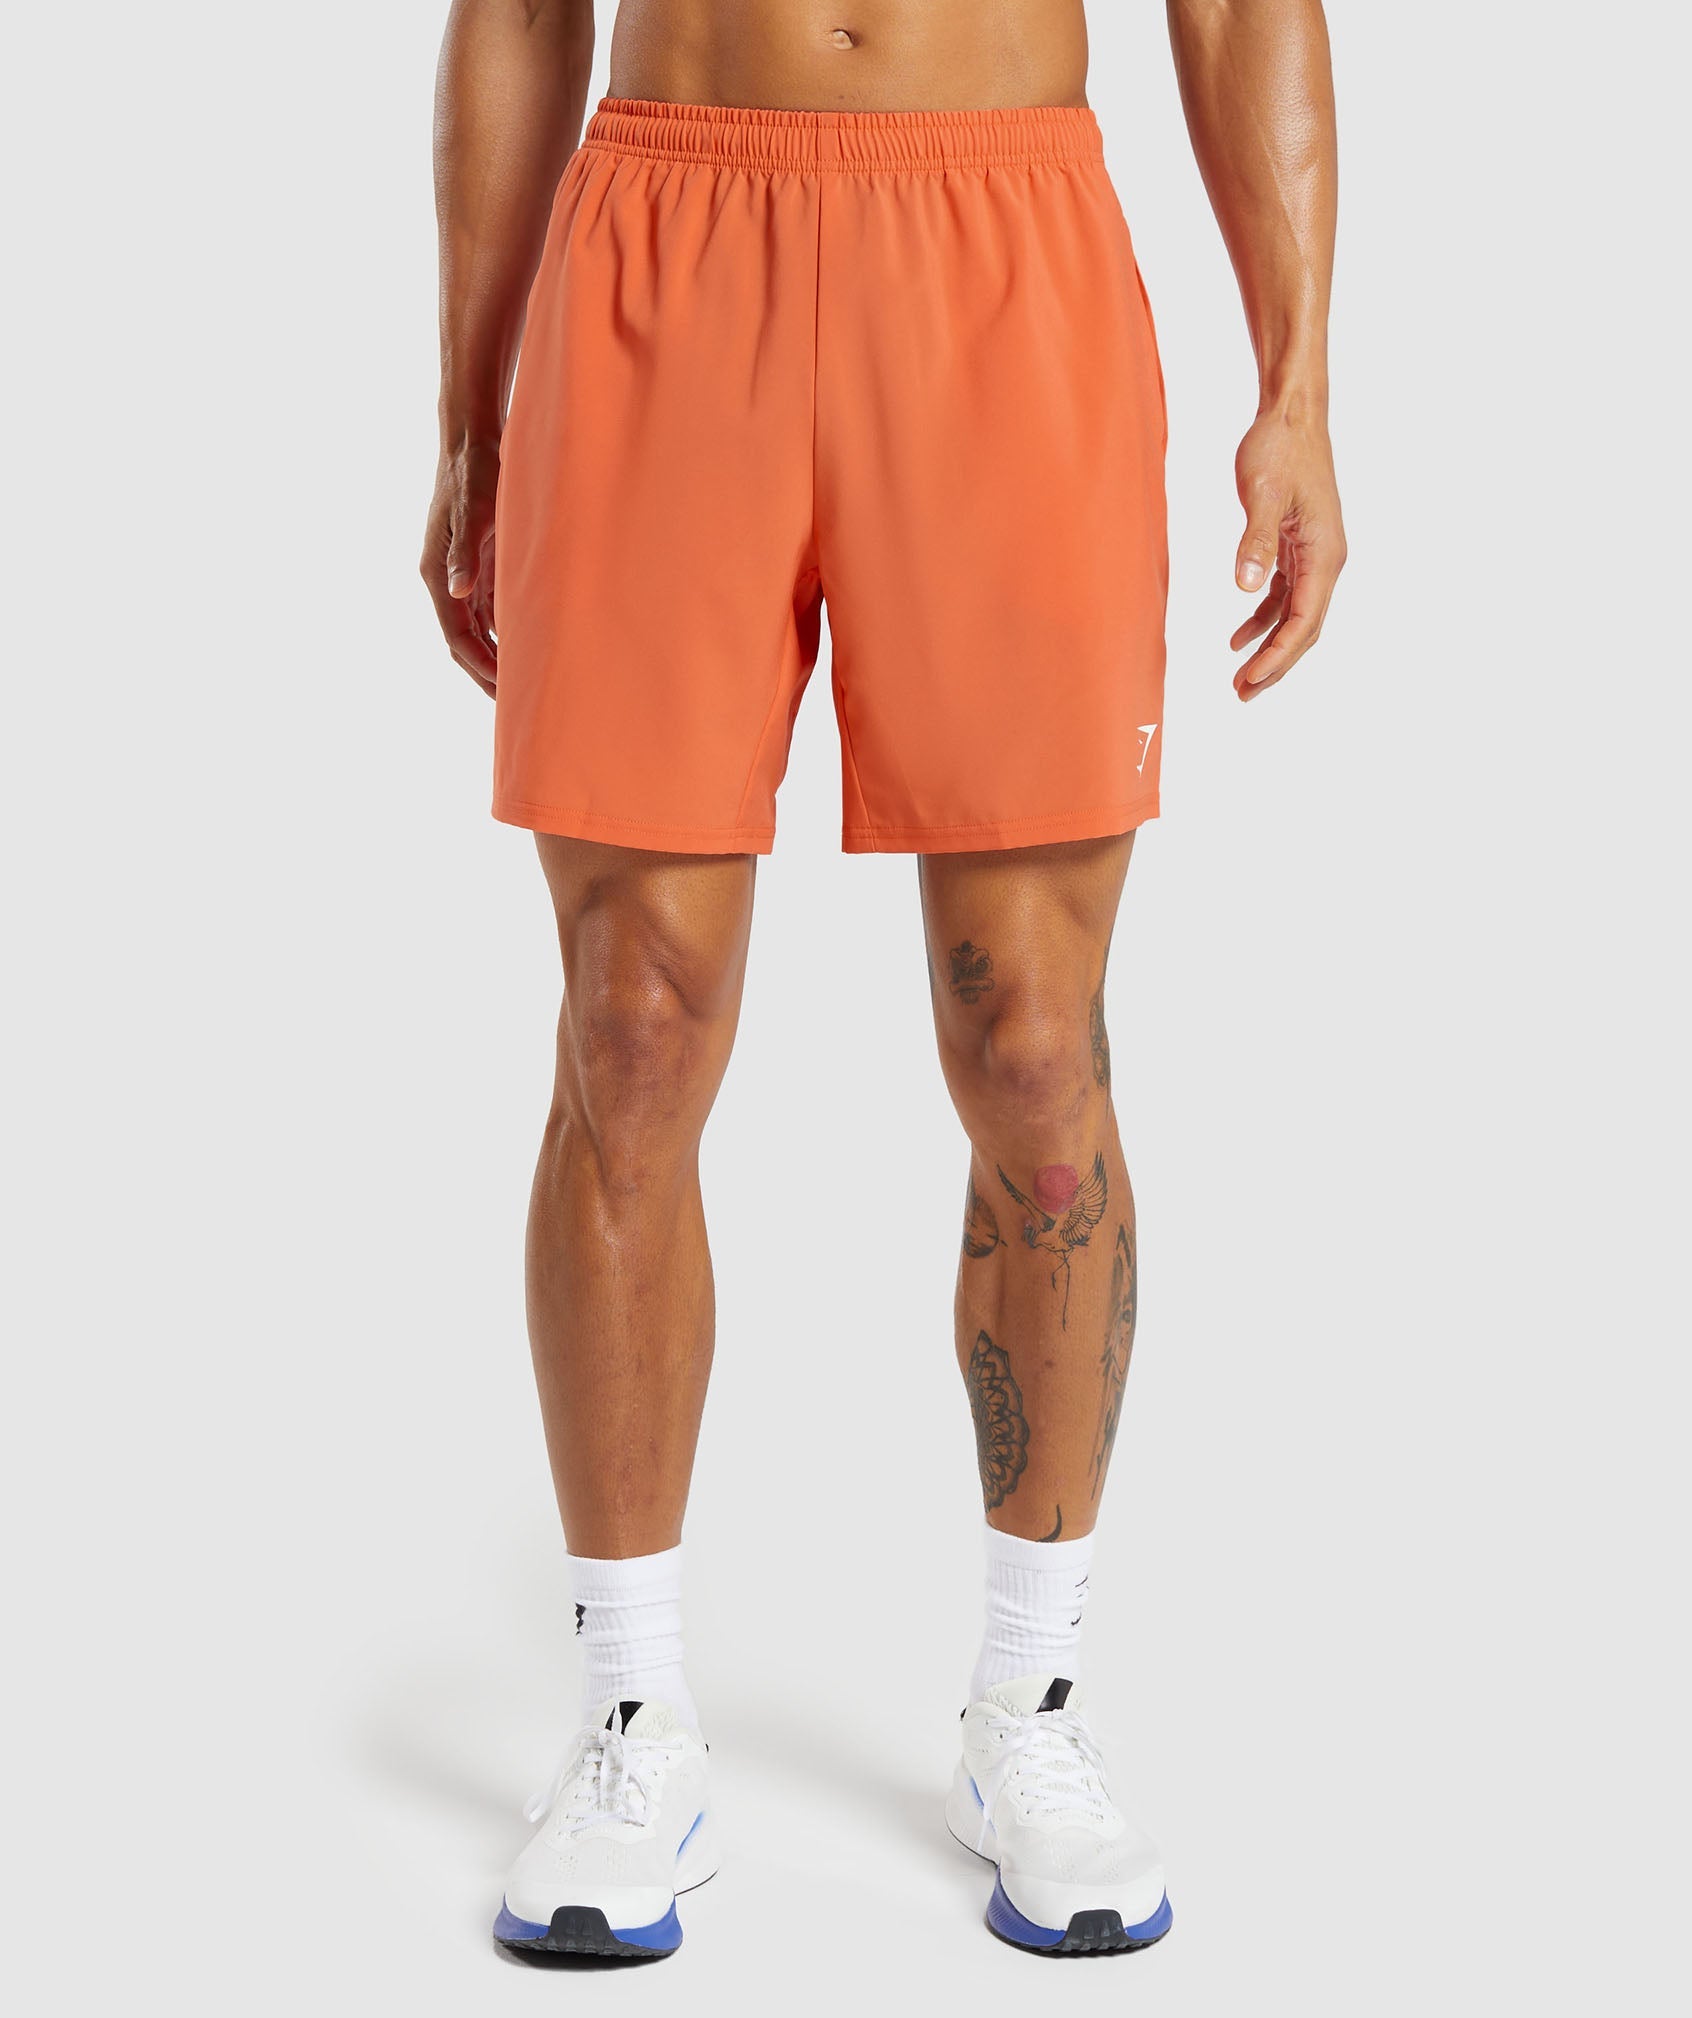 Arrival 7" Shorts in Ignite Orange - view 1